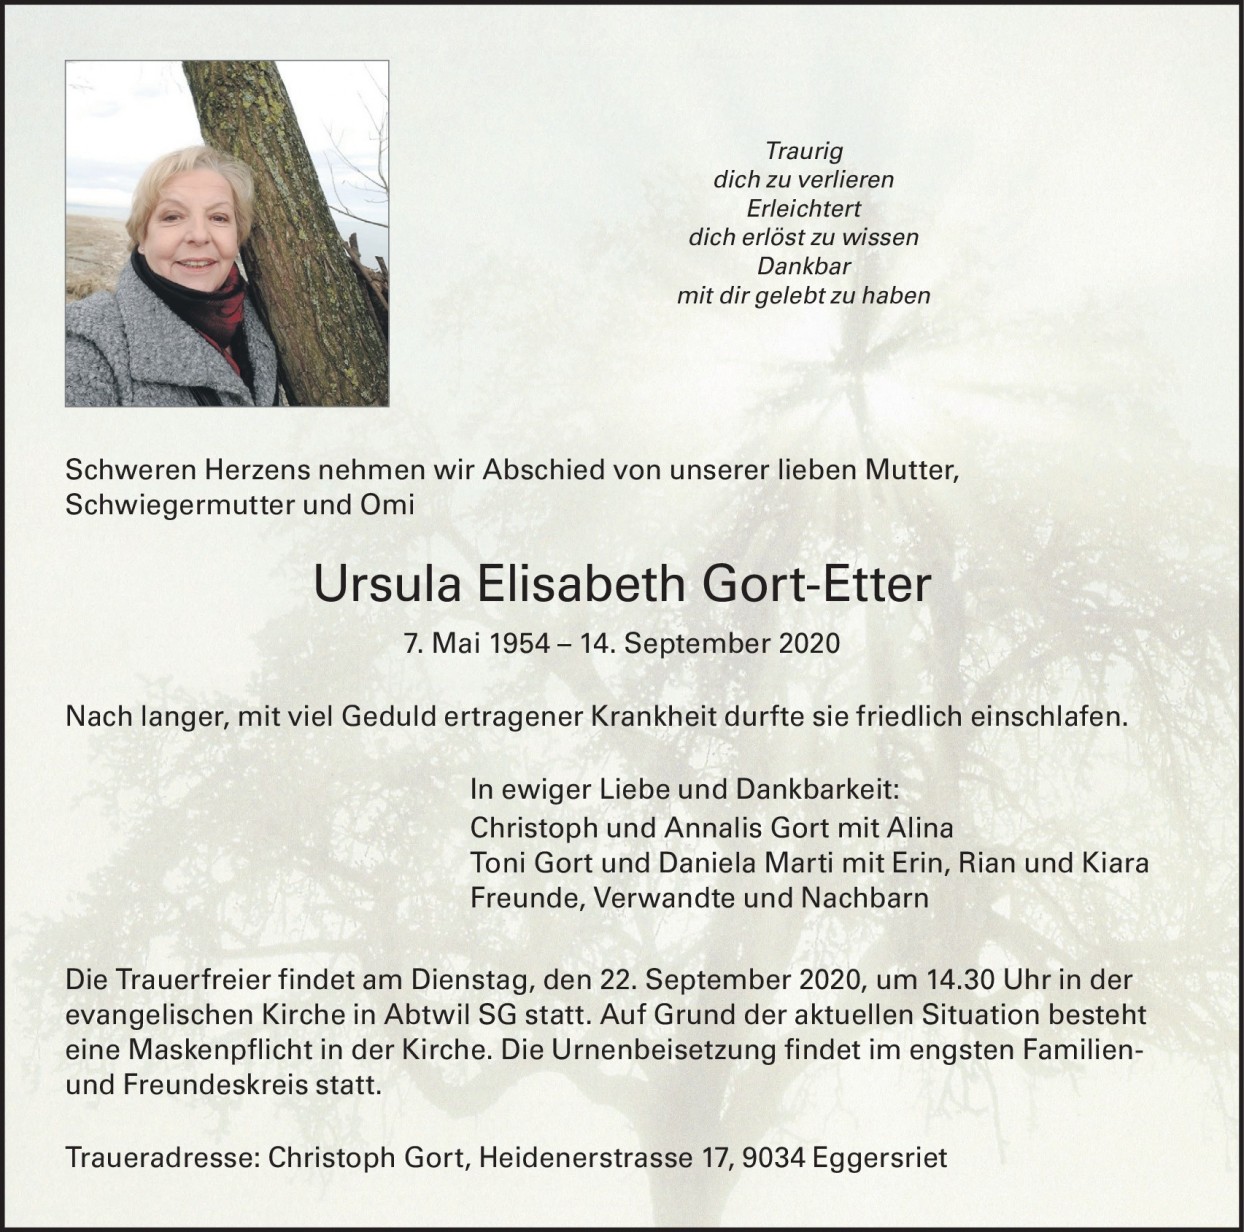 Ursula Elisabeth Gort-Etter